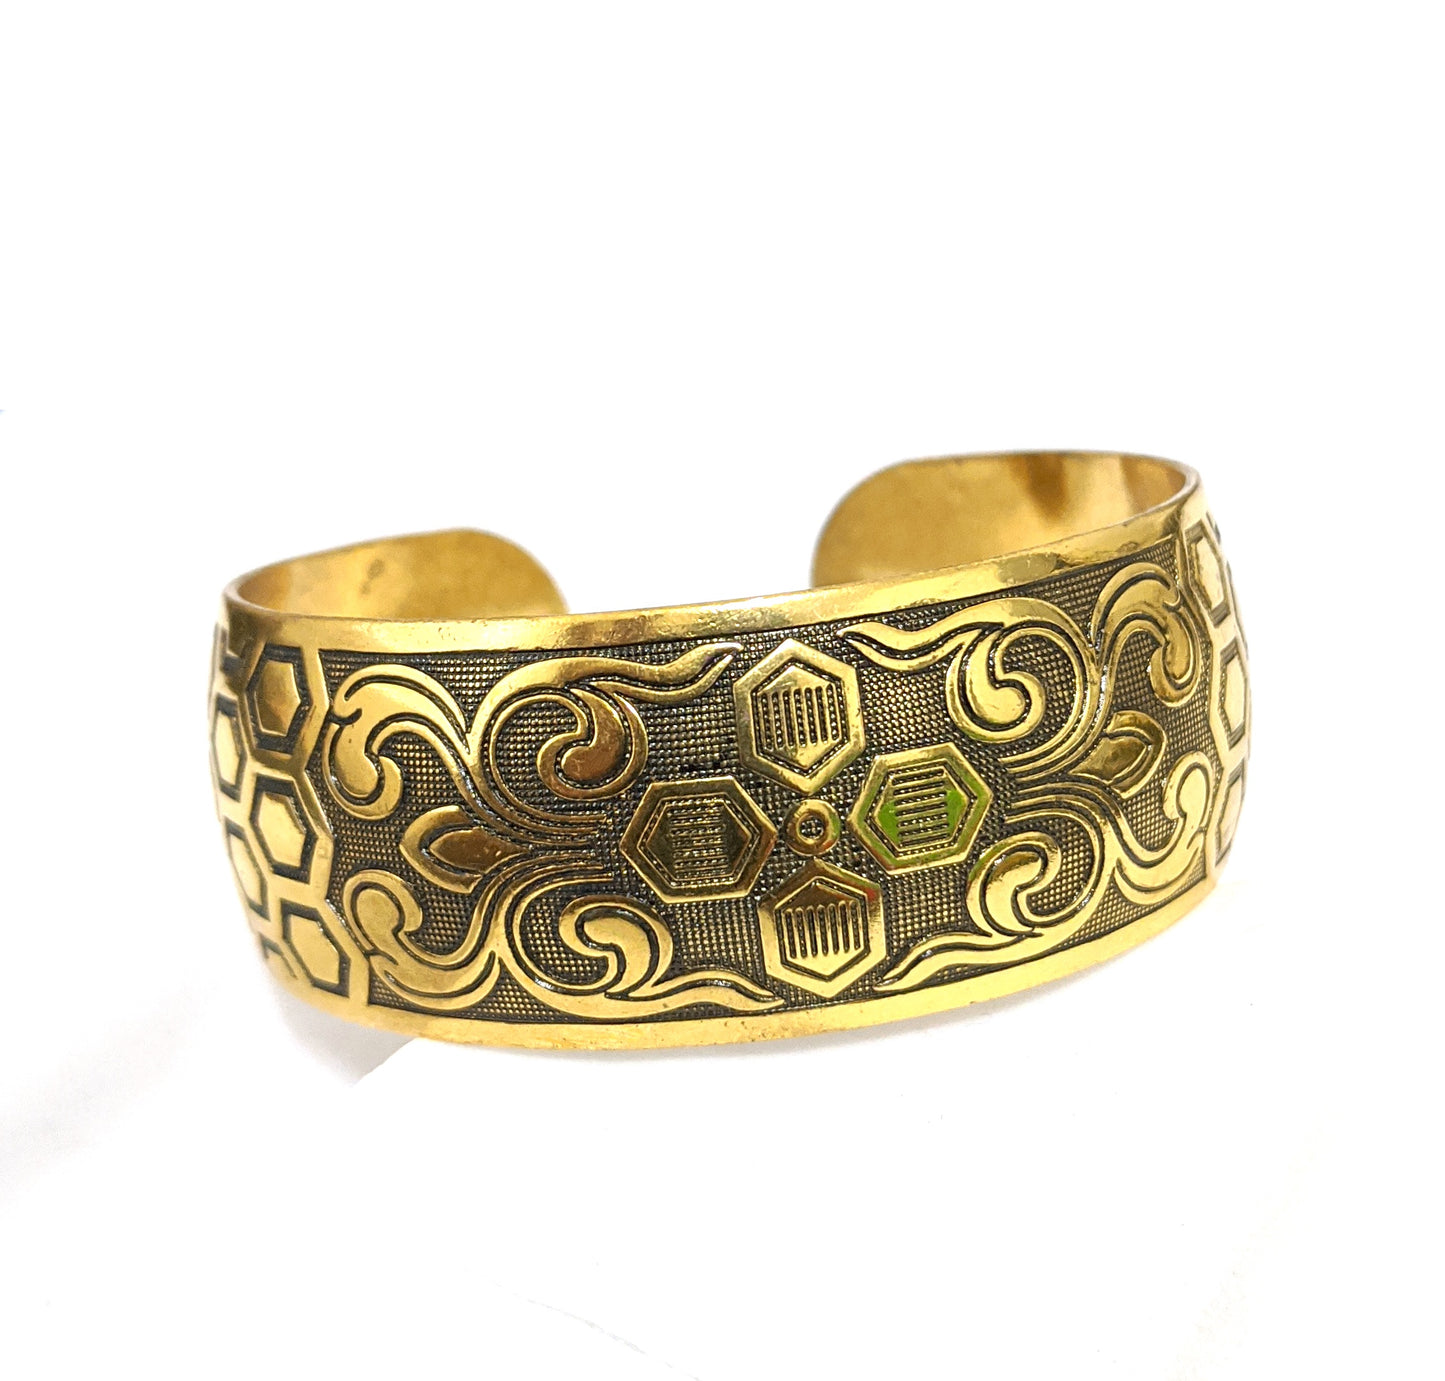 Antique gold finish oxidized broad kada - Design 2 - Simpliful